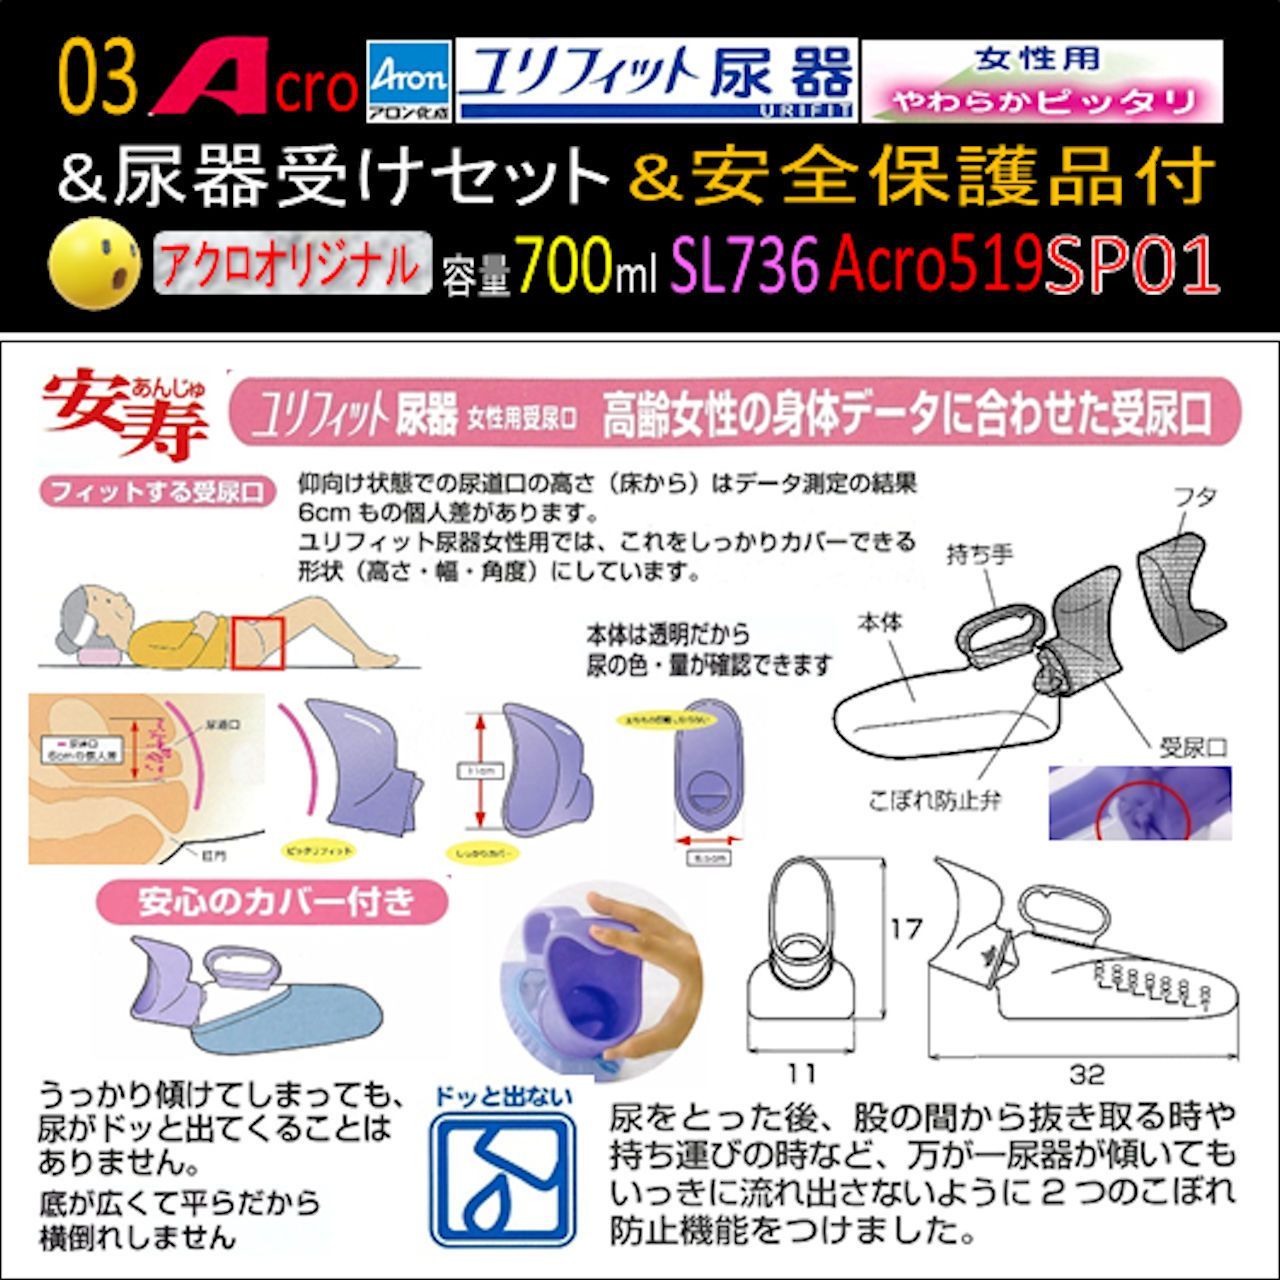 Acro519ユリフィット尿器女性用&尿器受けセット&衛生・安全保護用品付